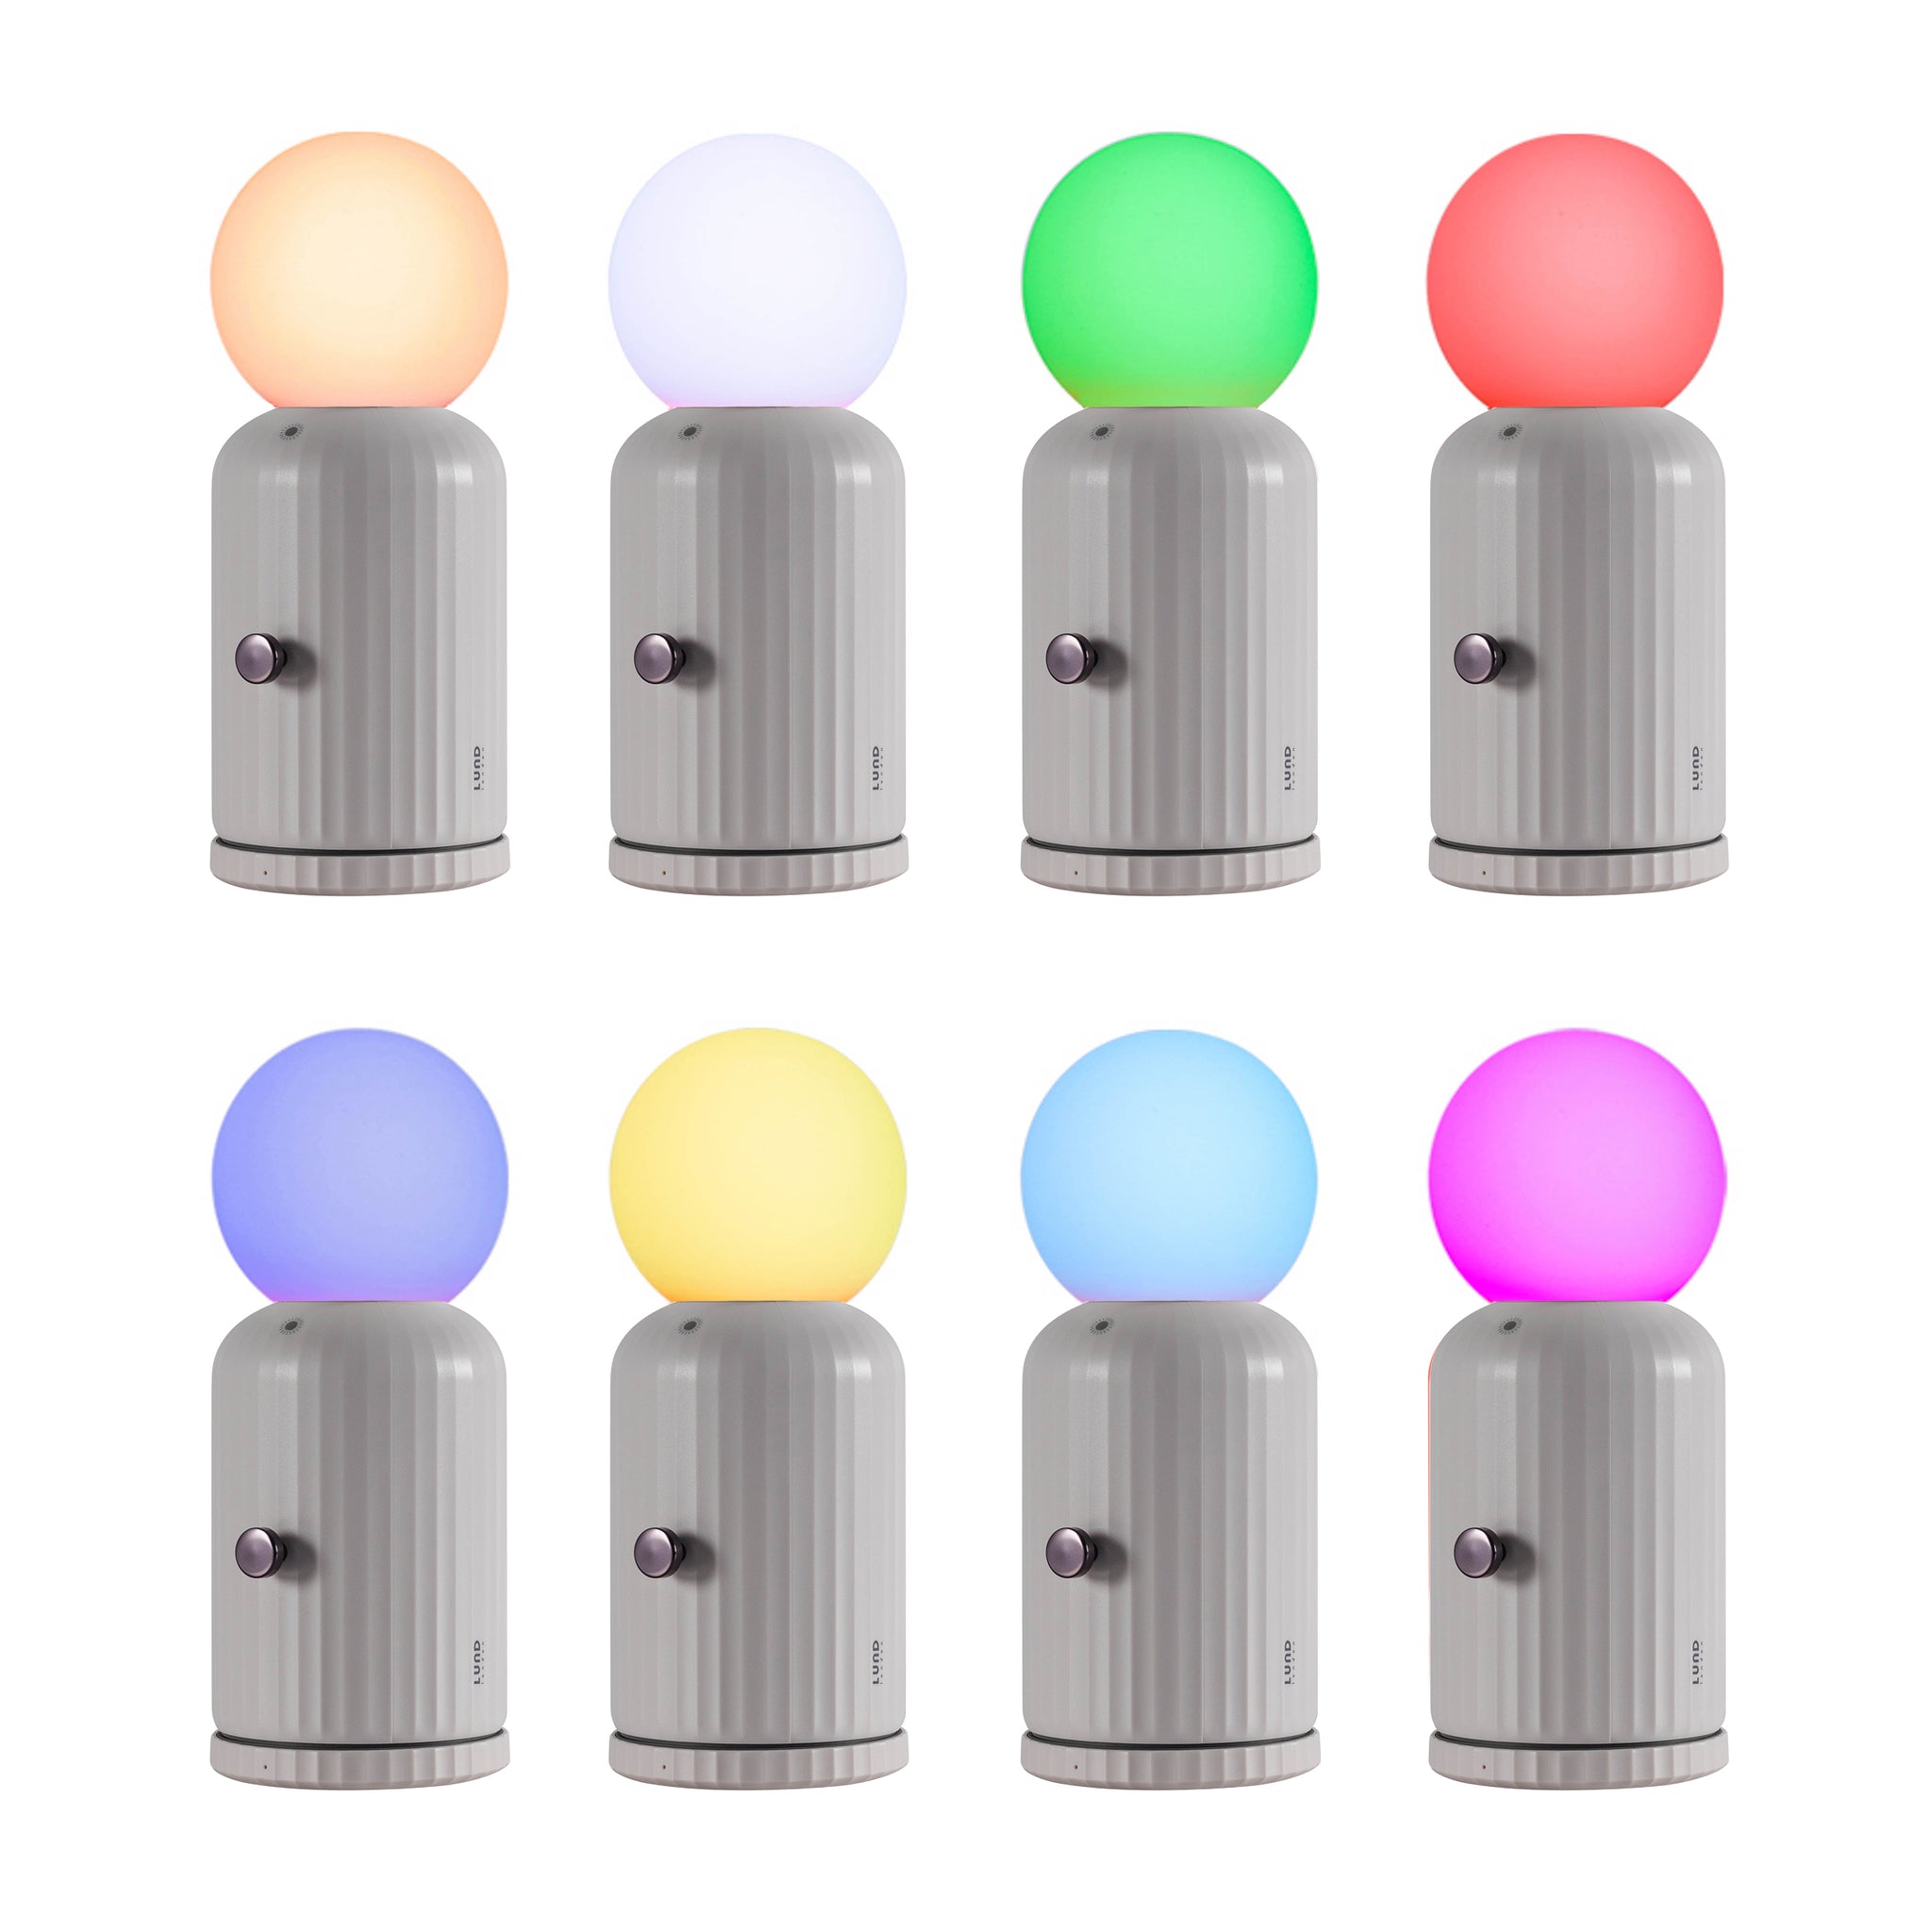 Skittle Oplaadbare Lamp Wit│Lund London│Draadloos│afbeelding 8 verschillende kleuren licht